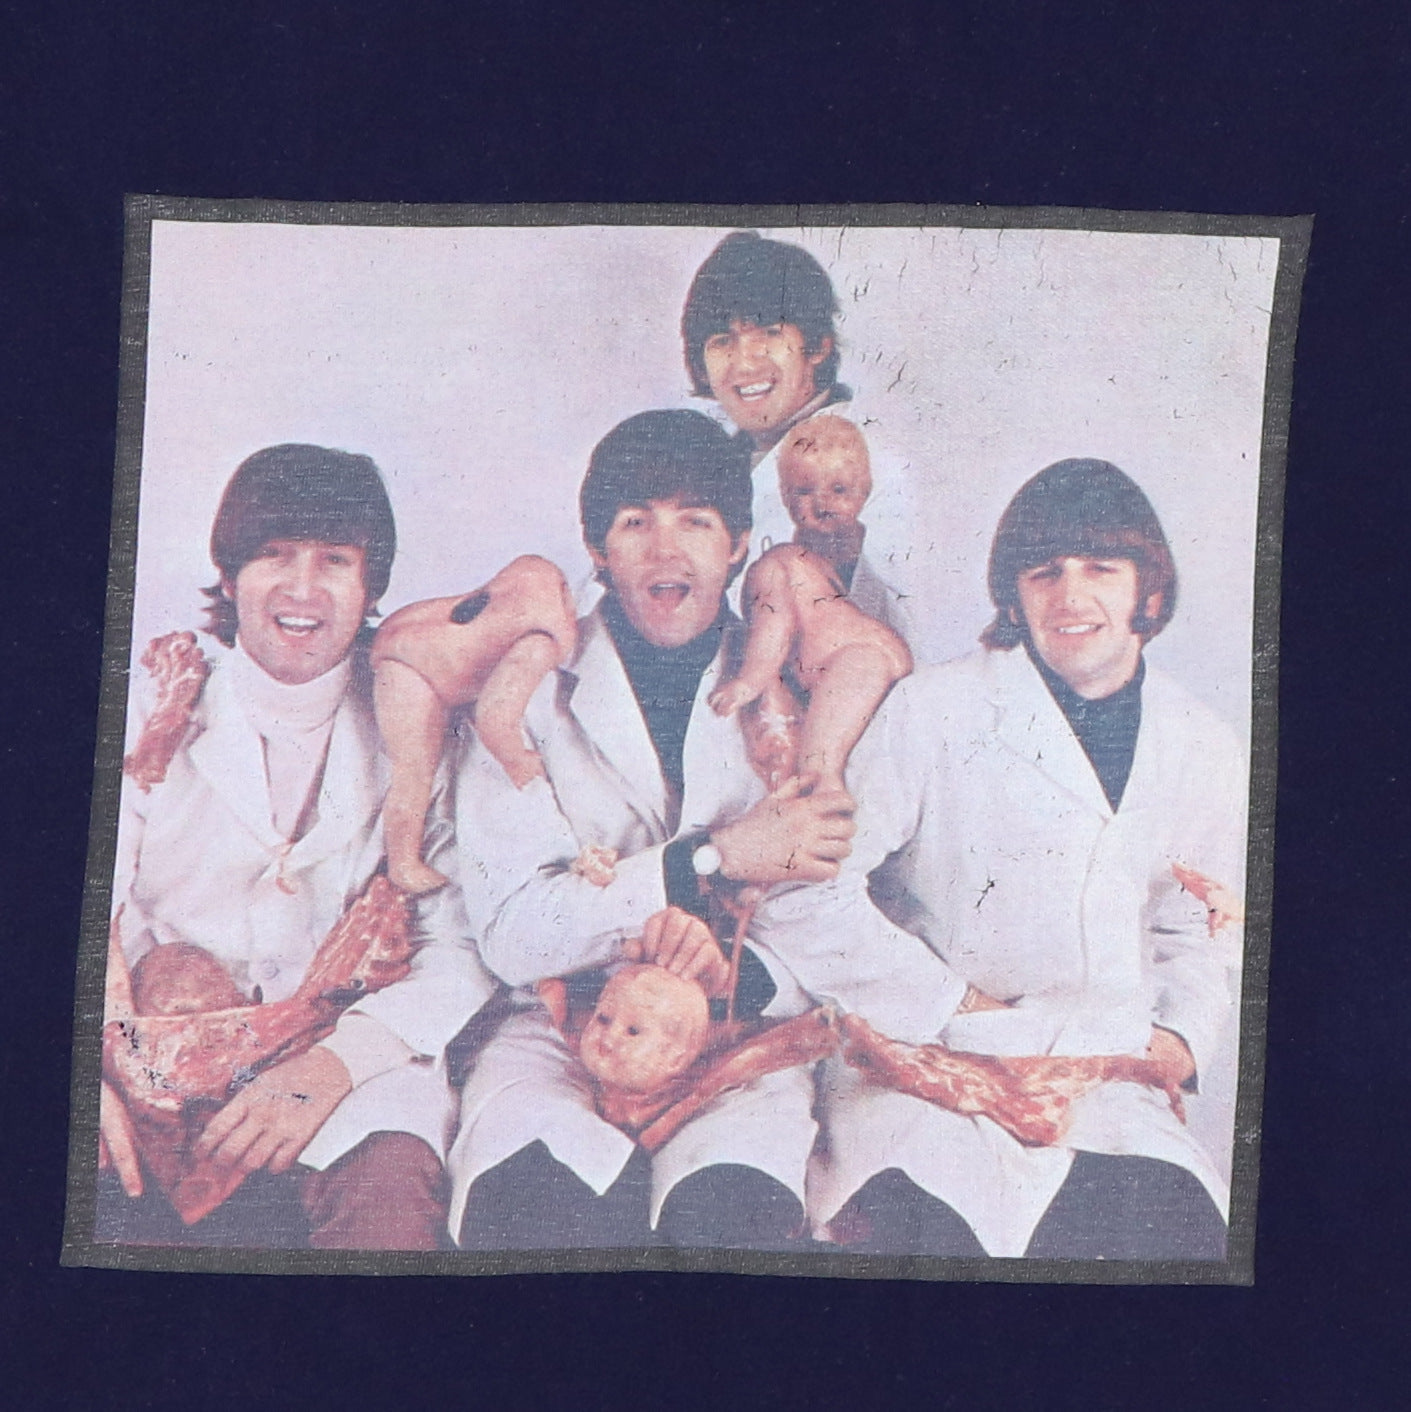 1970s Beatles Butcher Album Cover Shirt